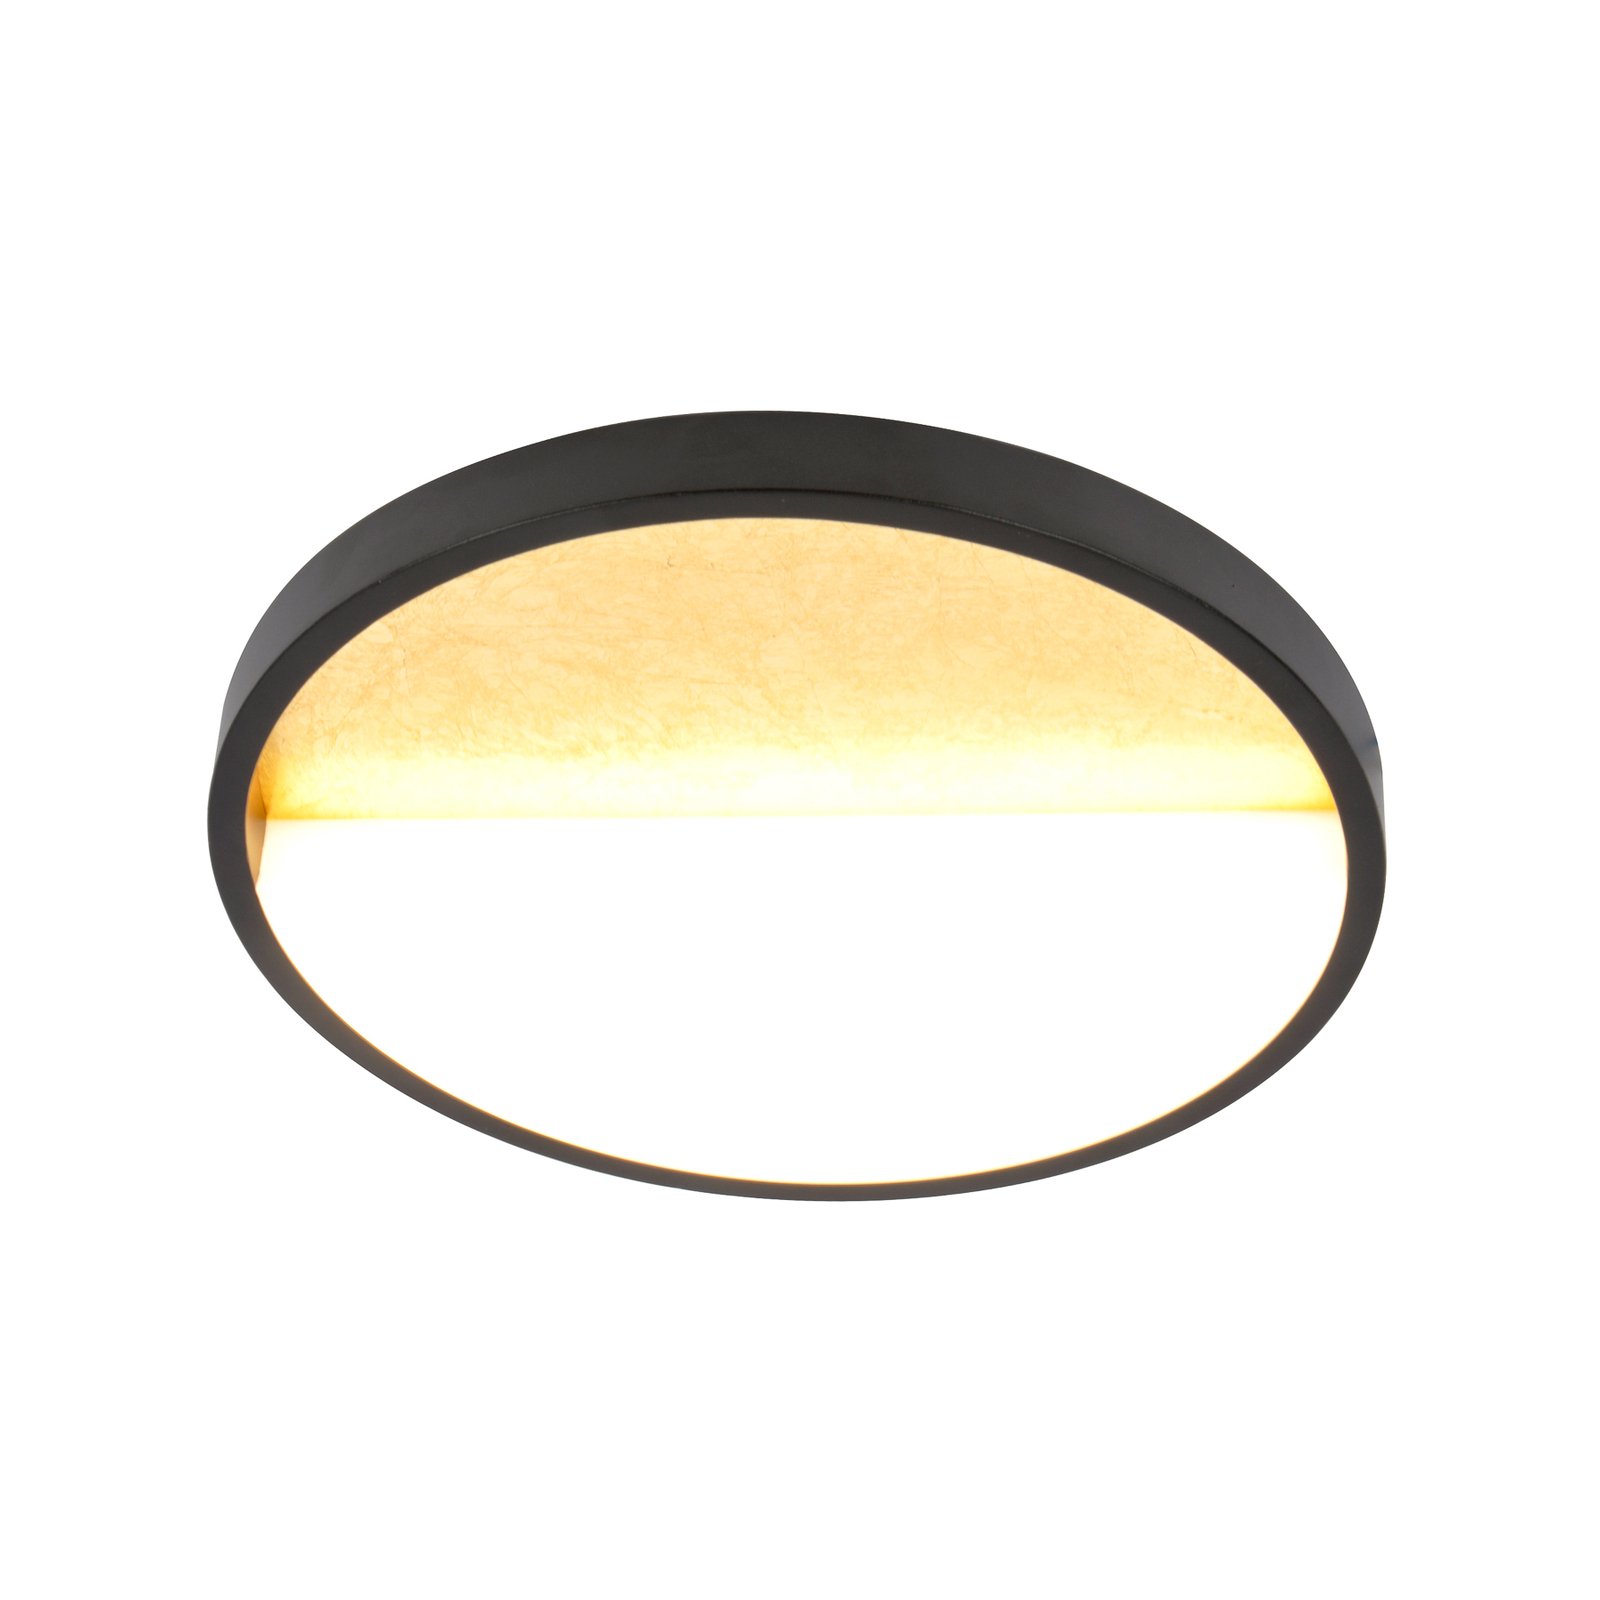 Vista LED sienas lampa, zelta/melna, Ø 30 cm